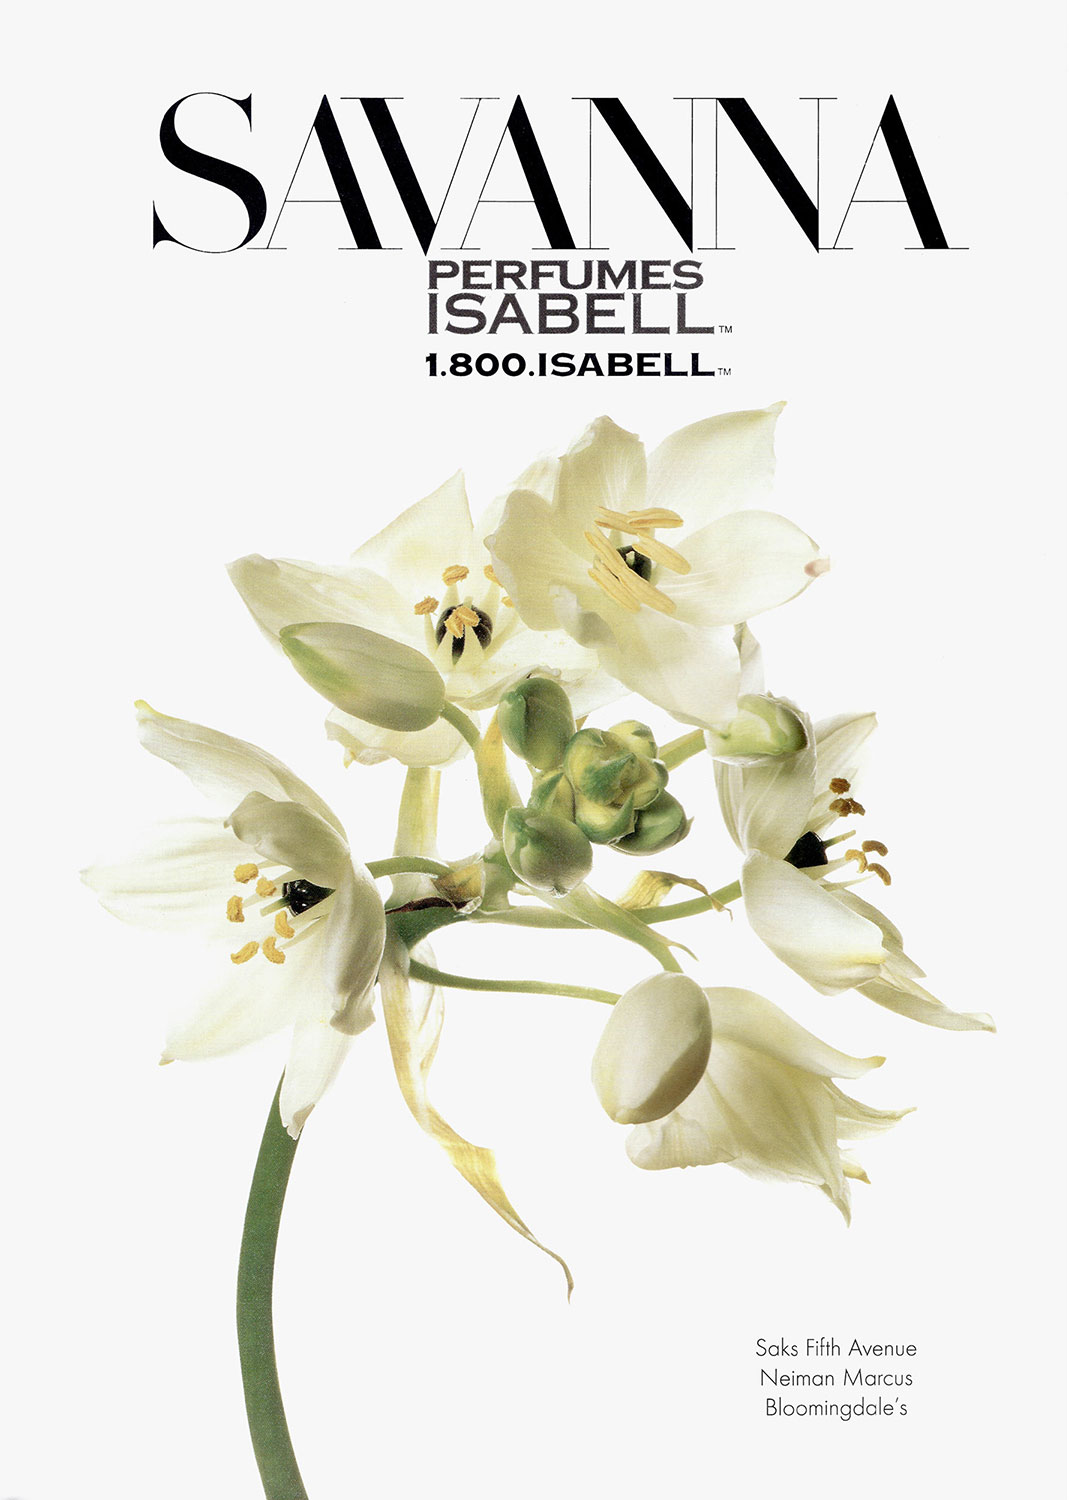 Advertising Still life Photographie Fotografie Studio Perfumes Isabel New York Savanna Blume Flower Orchid Orchidee Idris Kolodziej